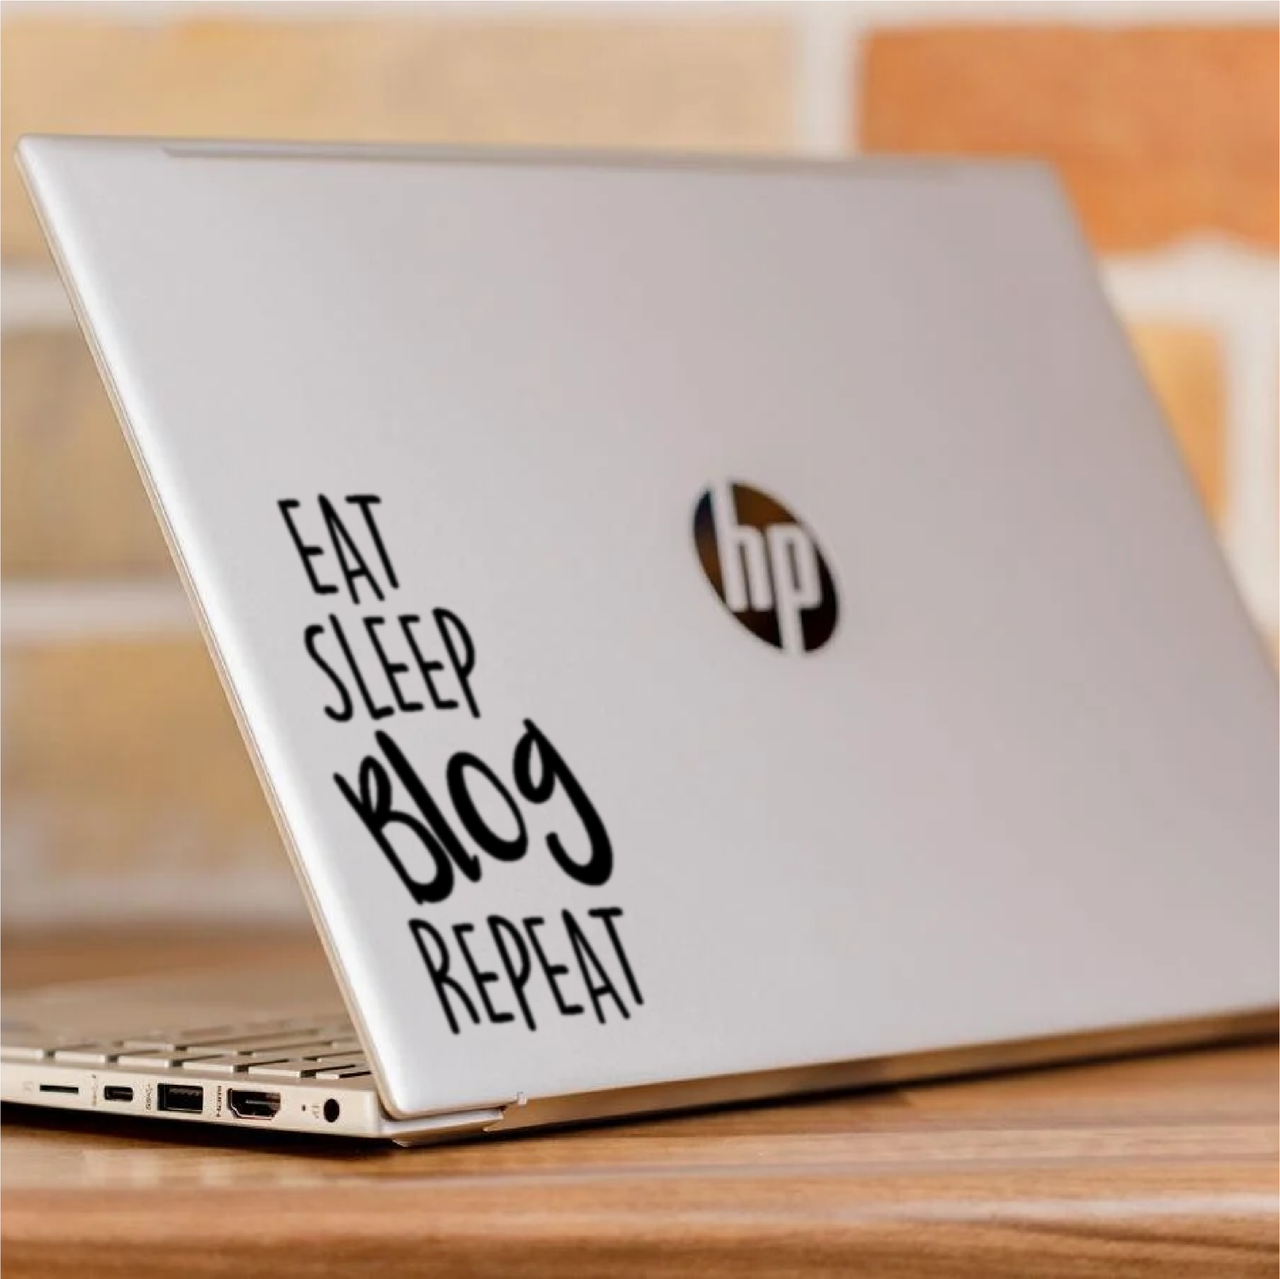 Eat Sleep Blog Repeat Laptop Decal